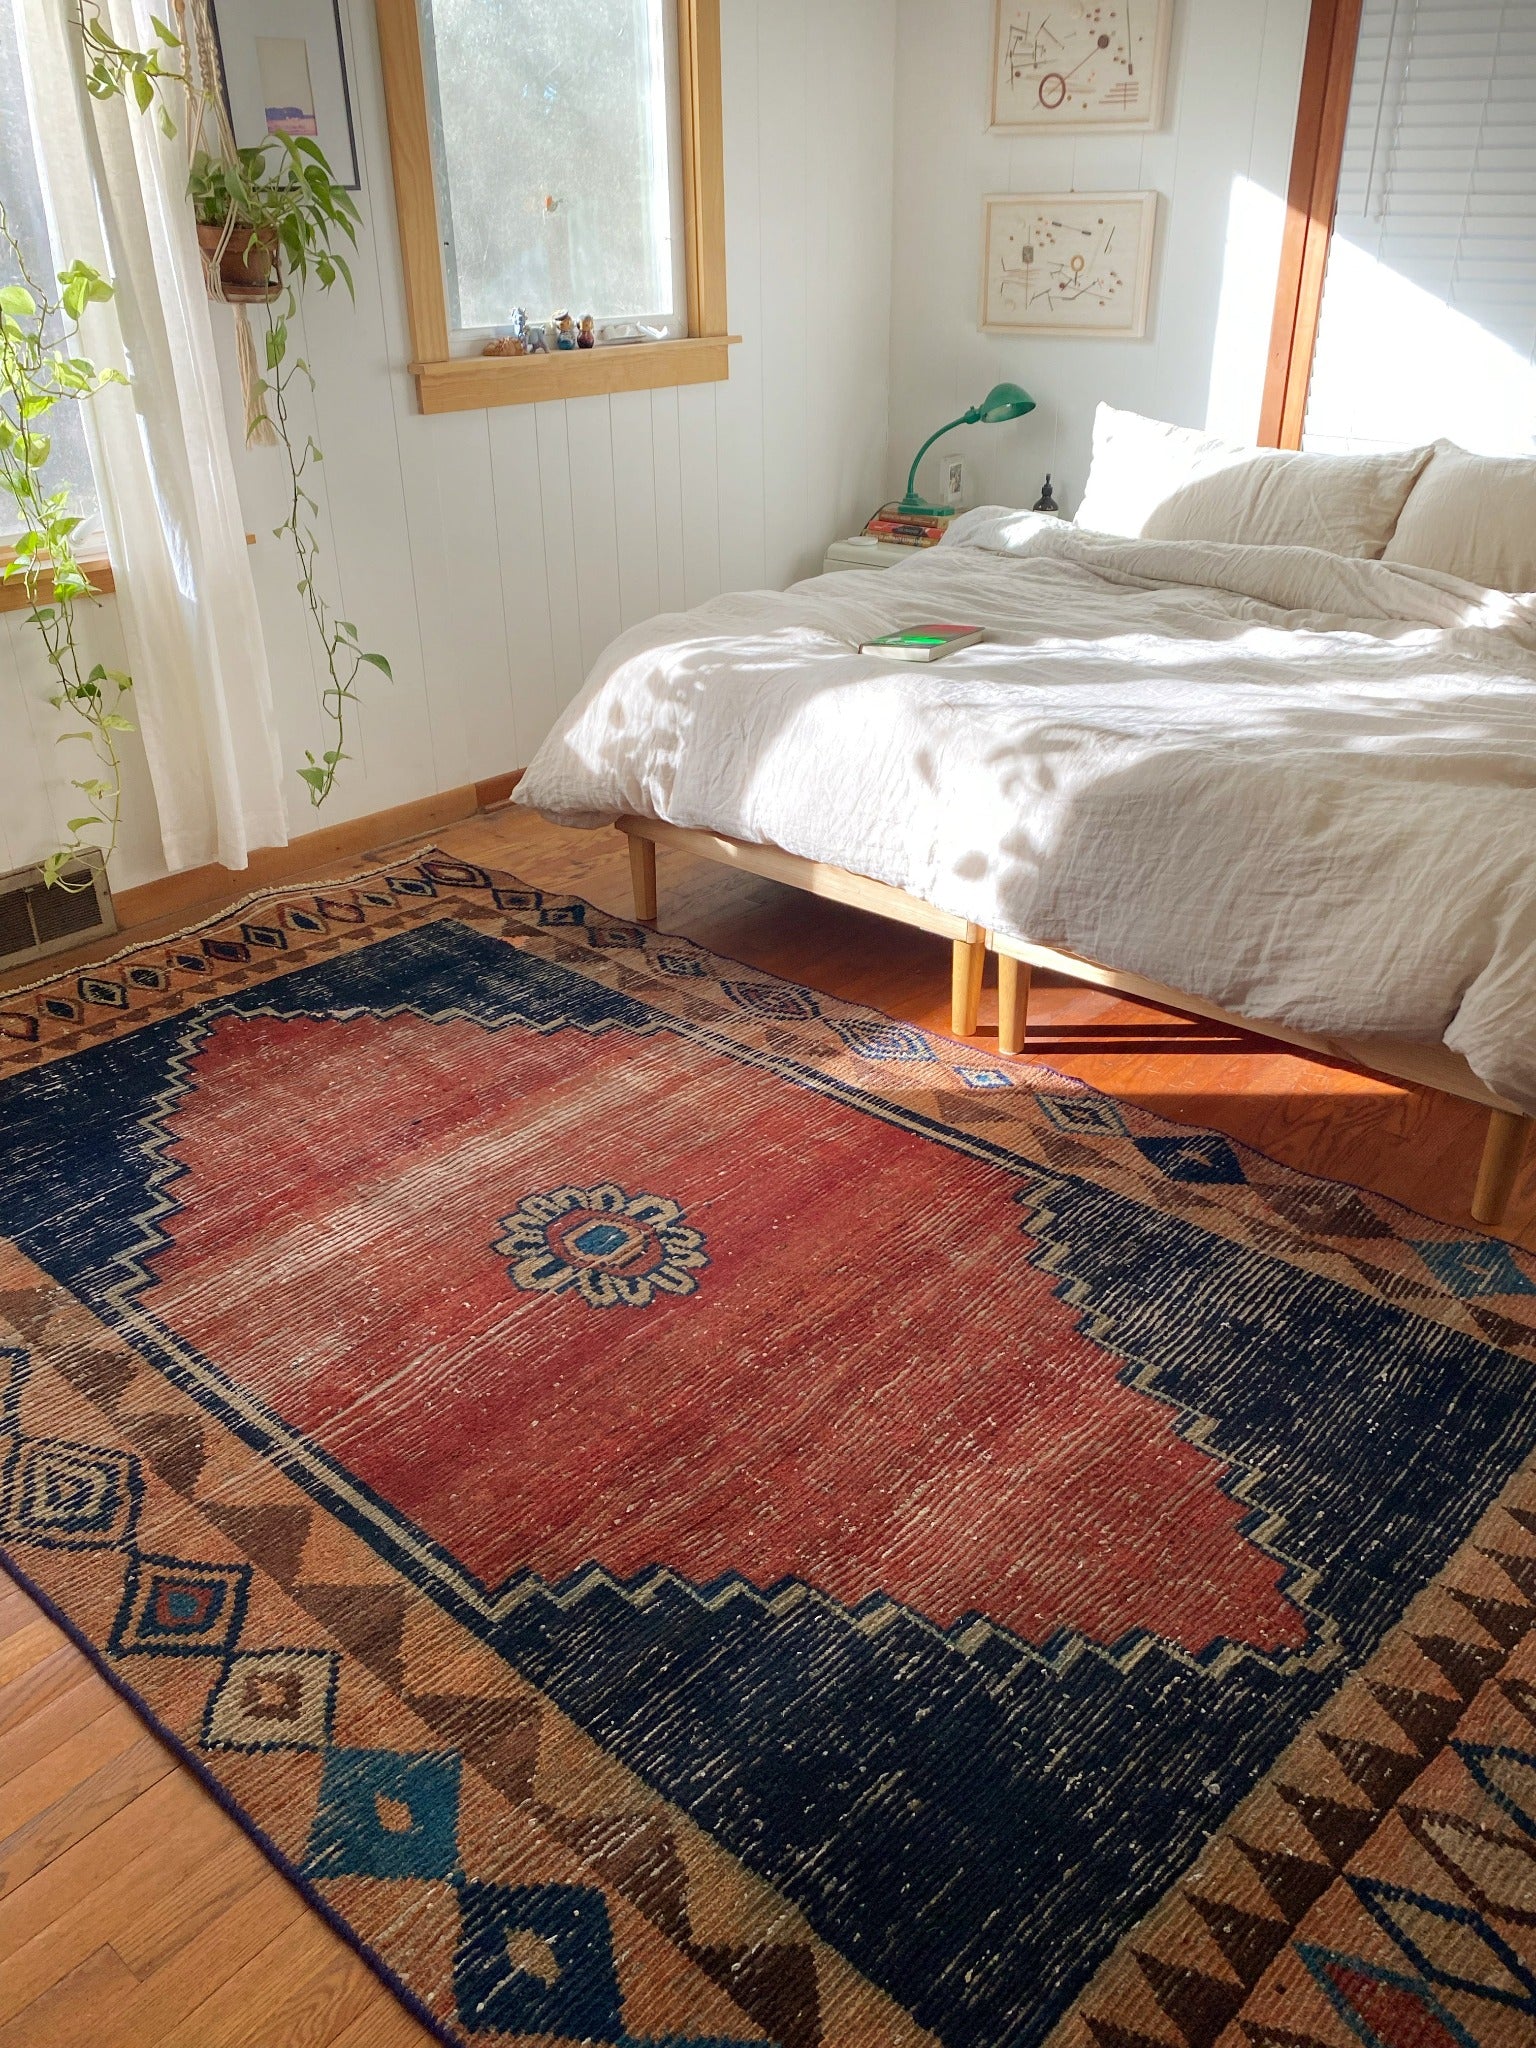 Style Zamia Multi Color Persian Rug in a Bedroom